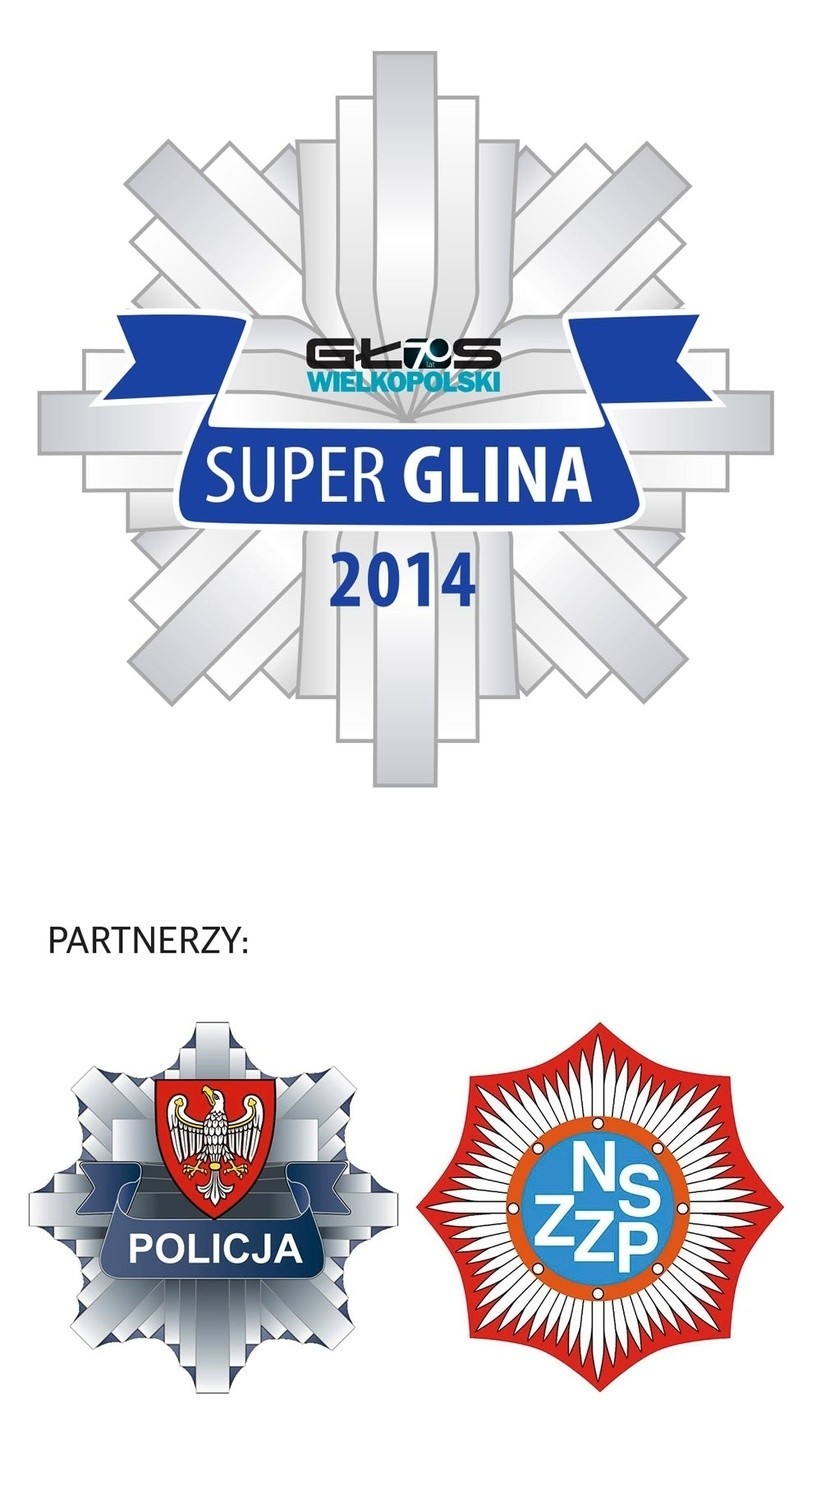 SuperGlina 2014: Sport to najlepszy sposób na stresującą pracę